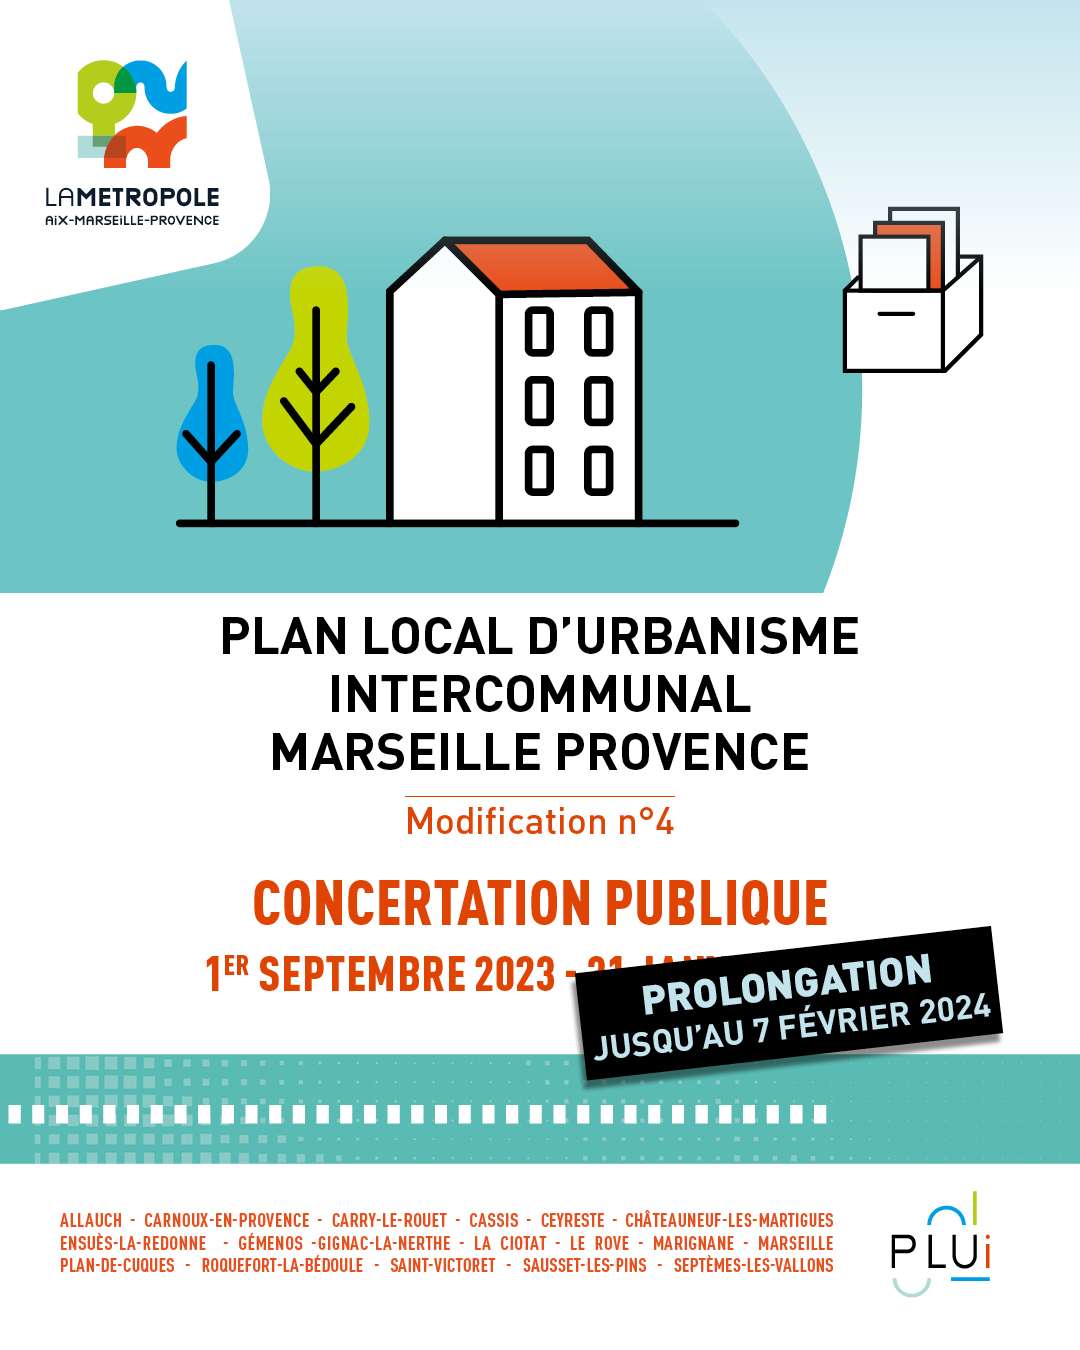   Modification n°4 du Plan Local d’Urbanisme intercommunal de Marseille-Provence